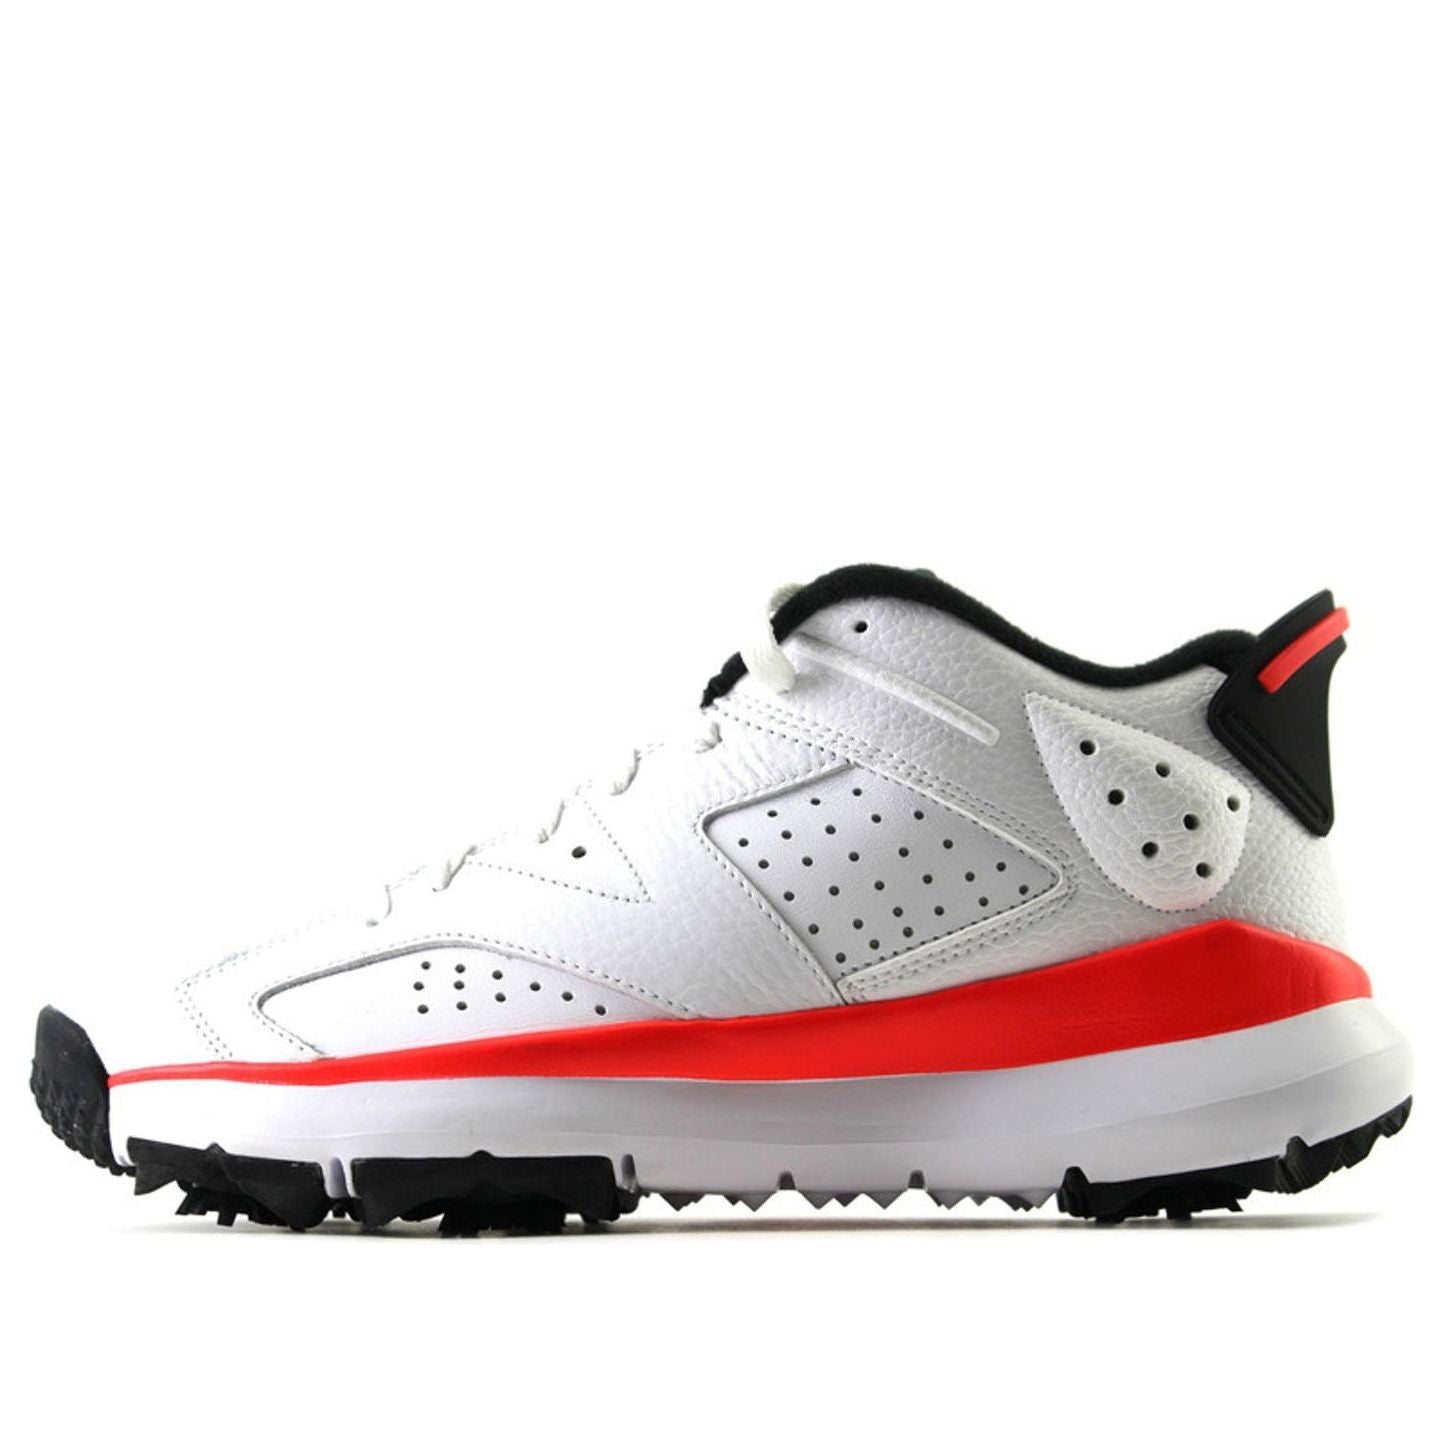 Air Jordan 6 Retro Low Golf 'Infrared' White/Black-Infrared 23 800657-123